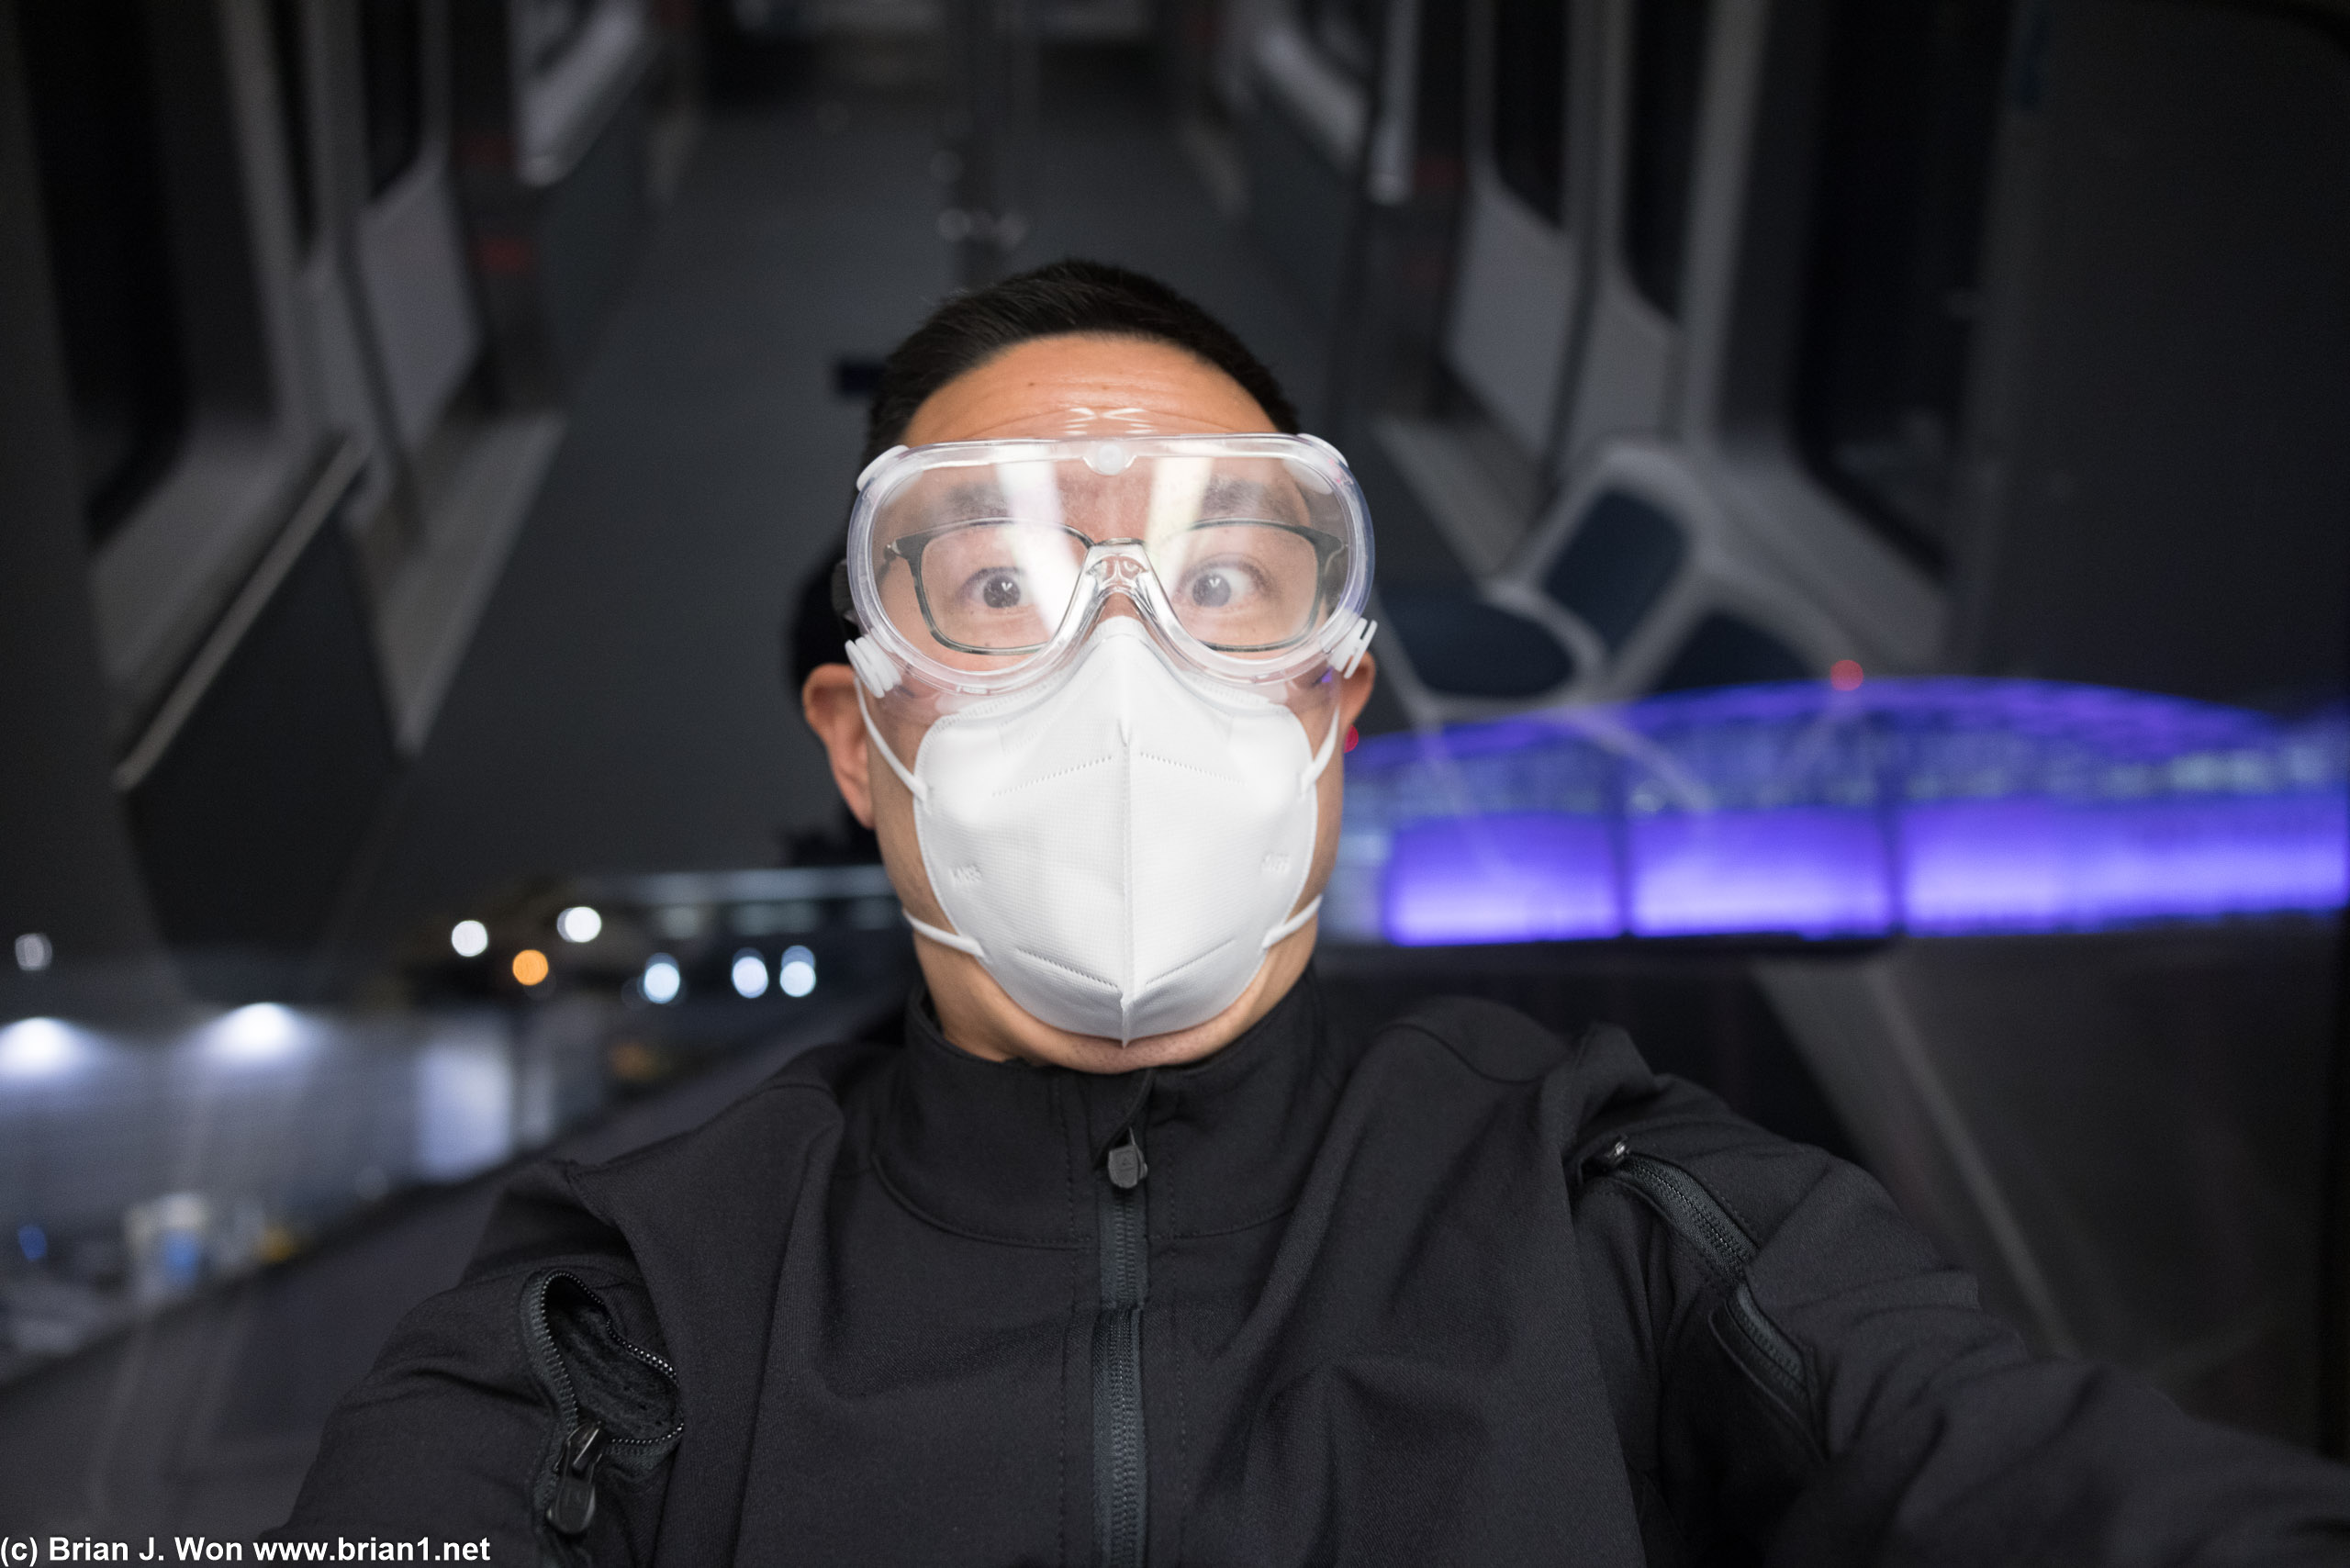 Mask and goggles. Aka staying safe.